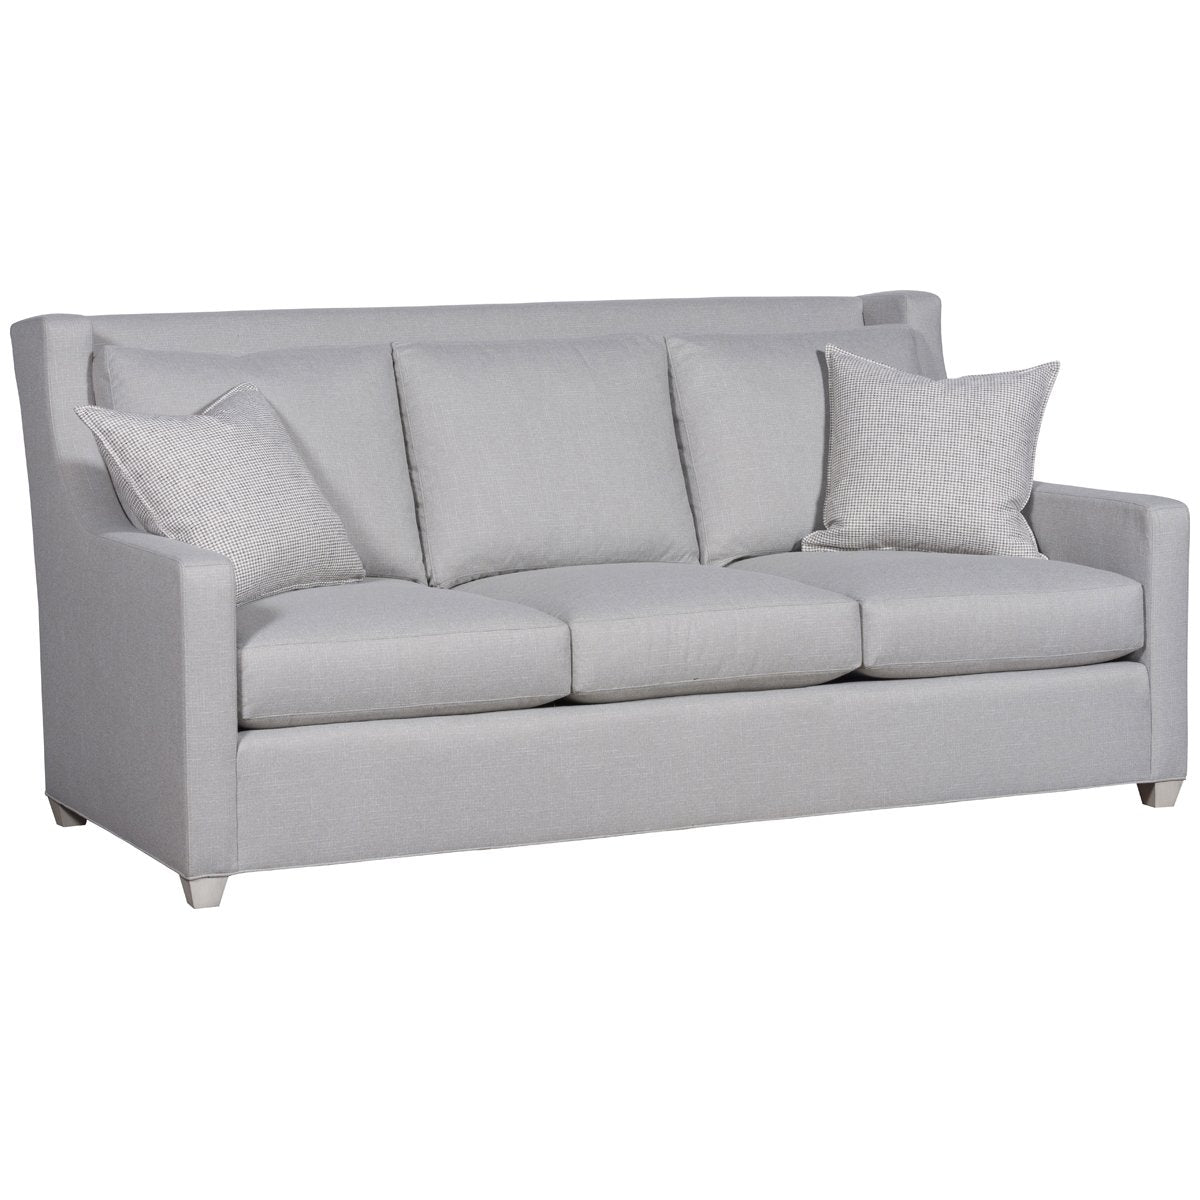 Vanguard Furniture Corby Sofa